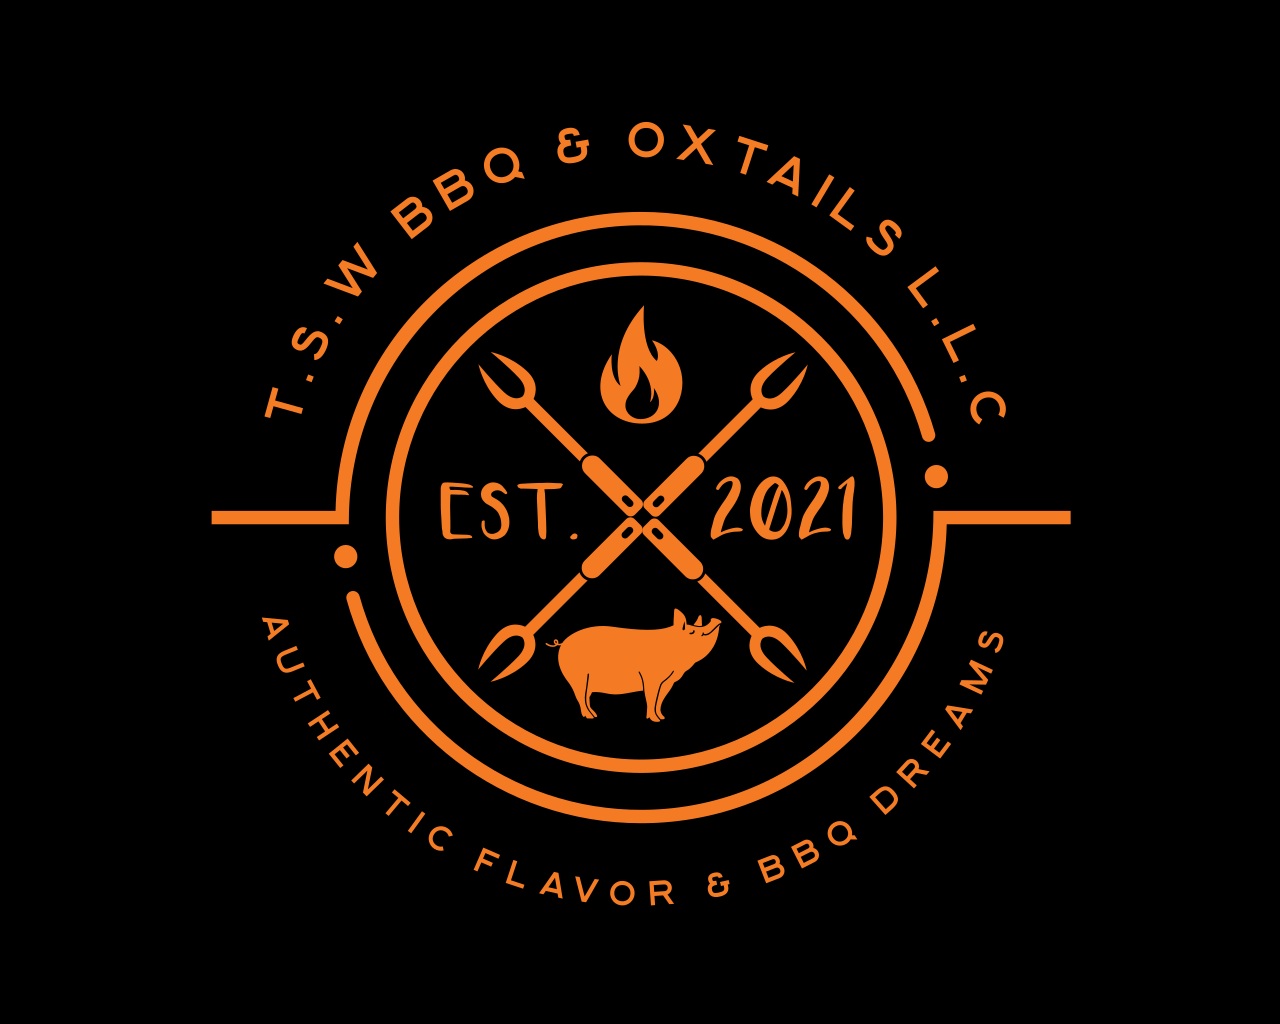 T.S.W B.B.Q & OXTAIL L.L.C.'s logo